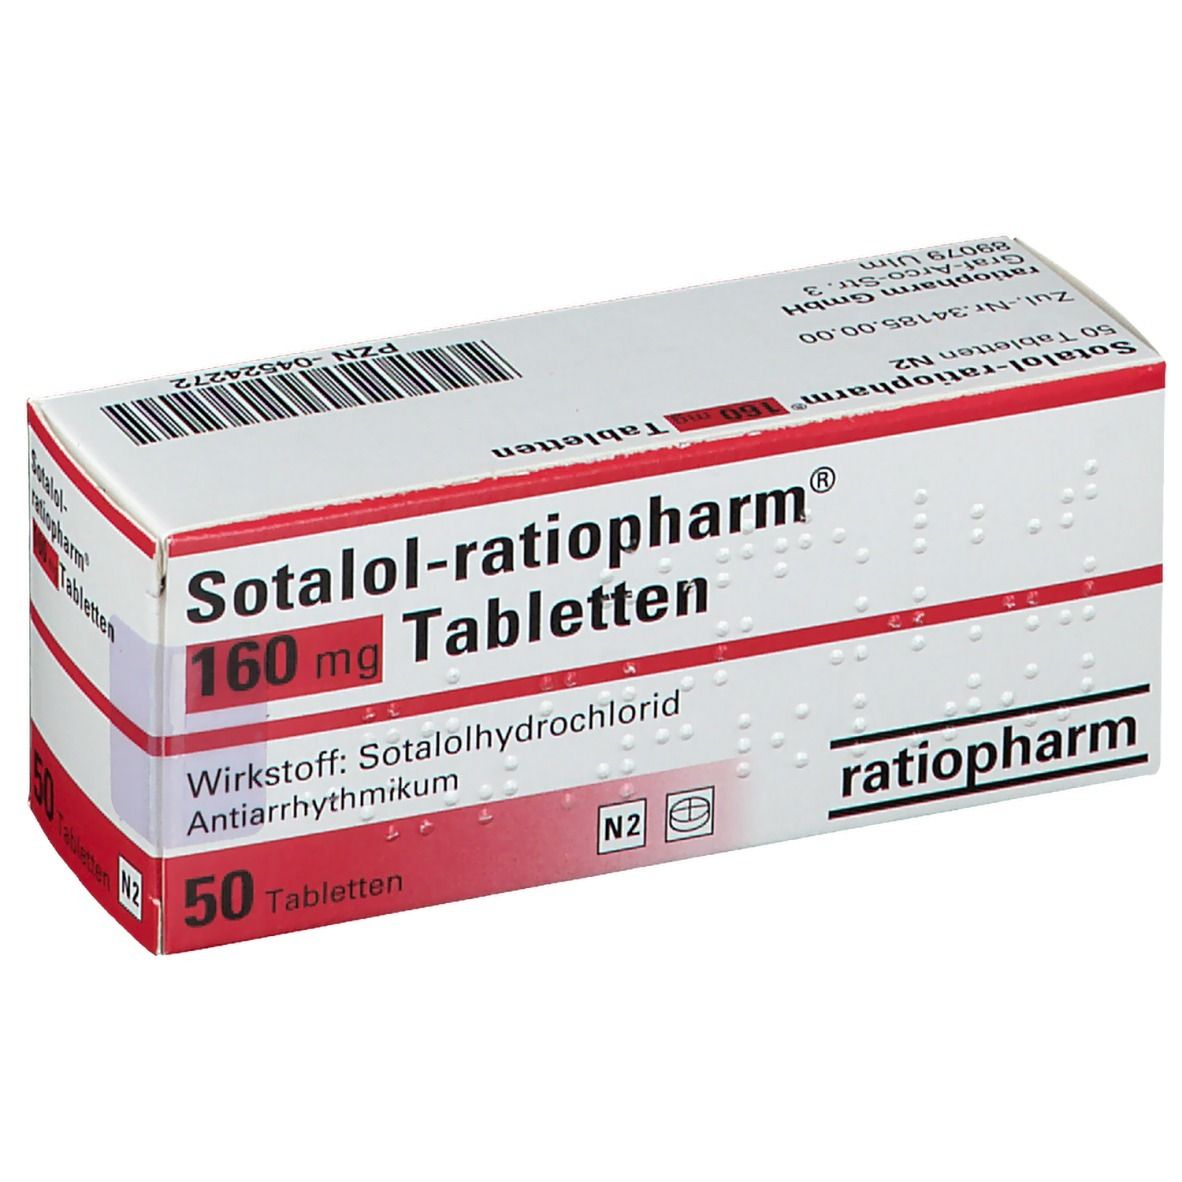 Sotalol-ratiopharm® 160 mg